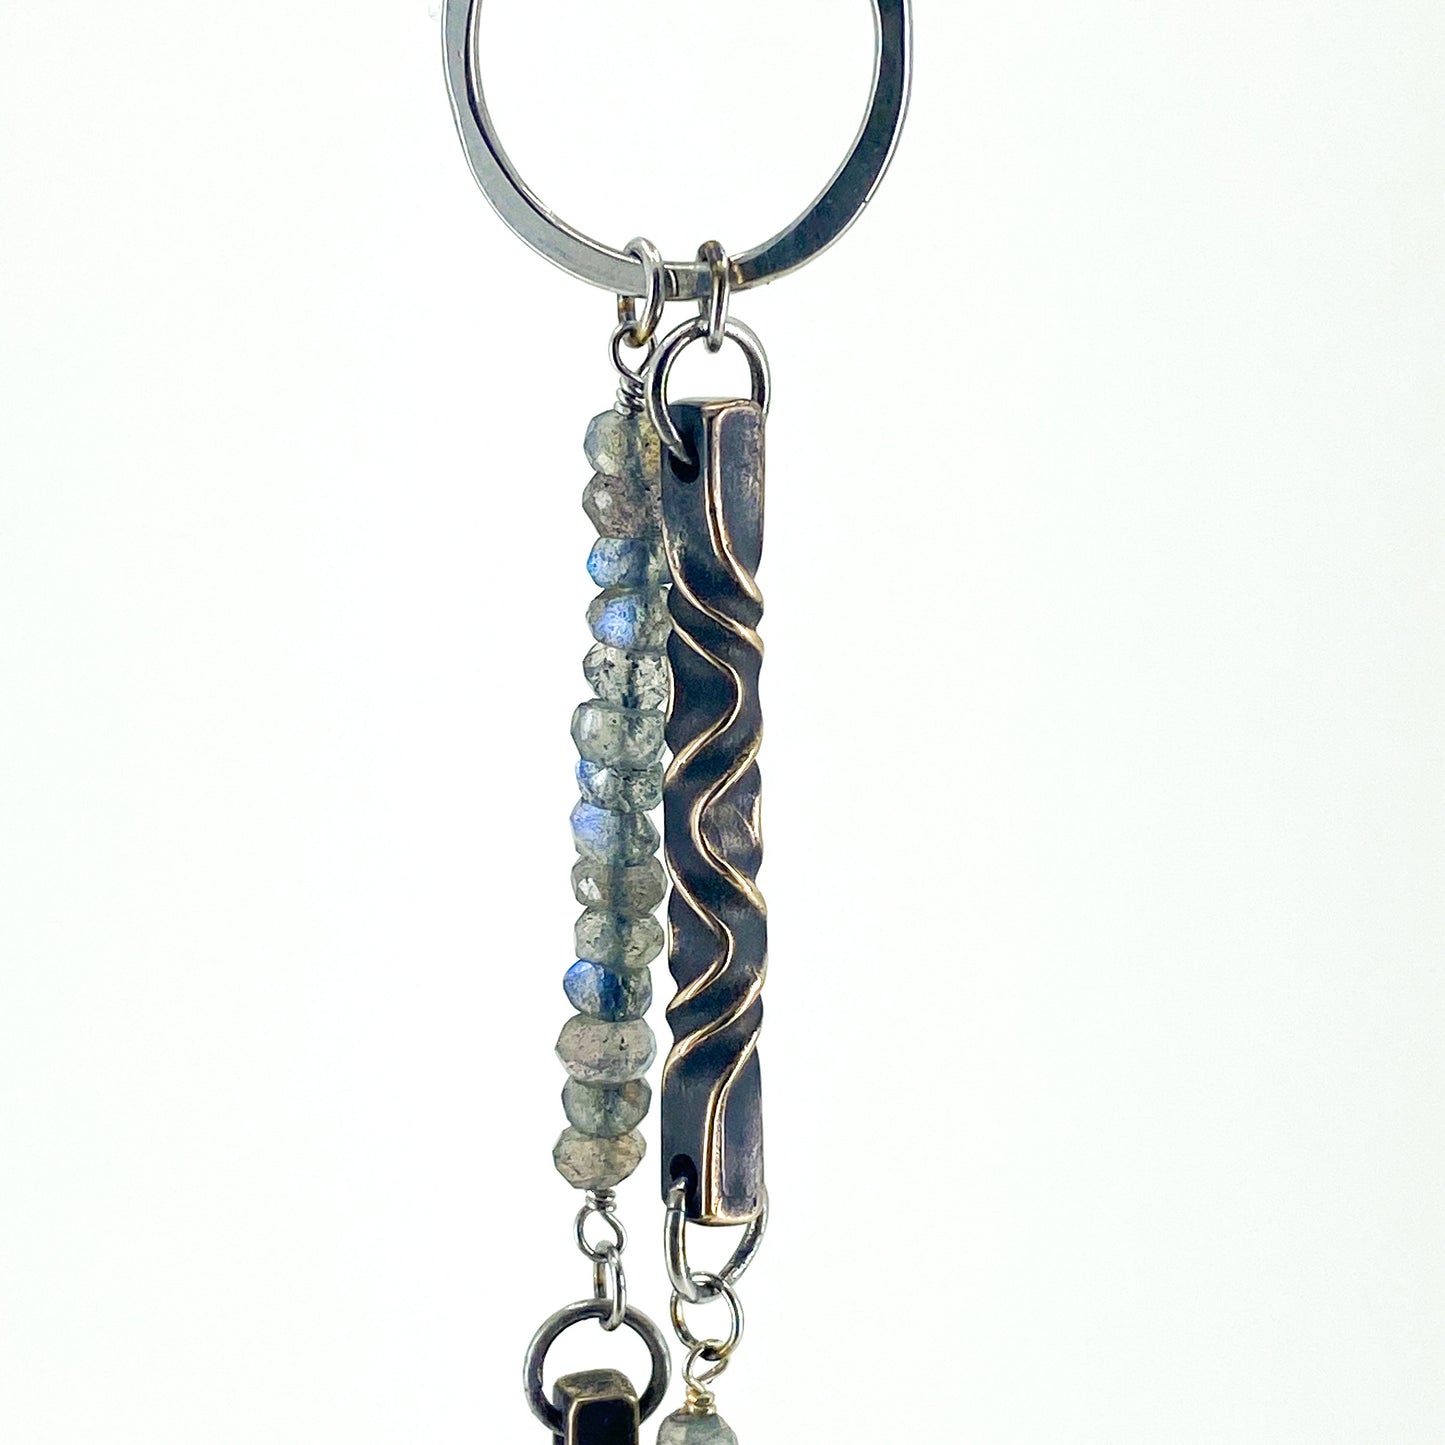 bronze and labradorite jewelry set, bronze necklace, 8th anniversary gift for her, labradorite bracelet, bronze twist earrings